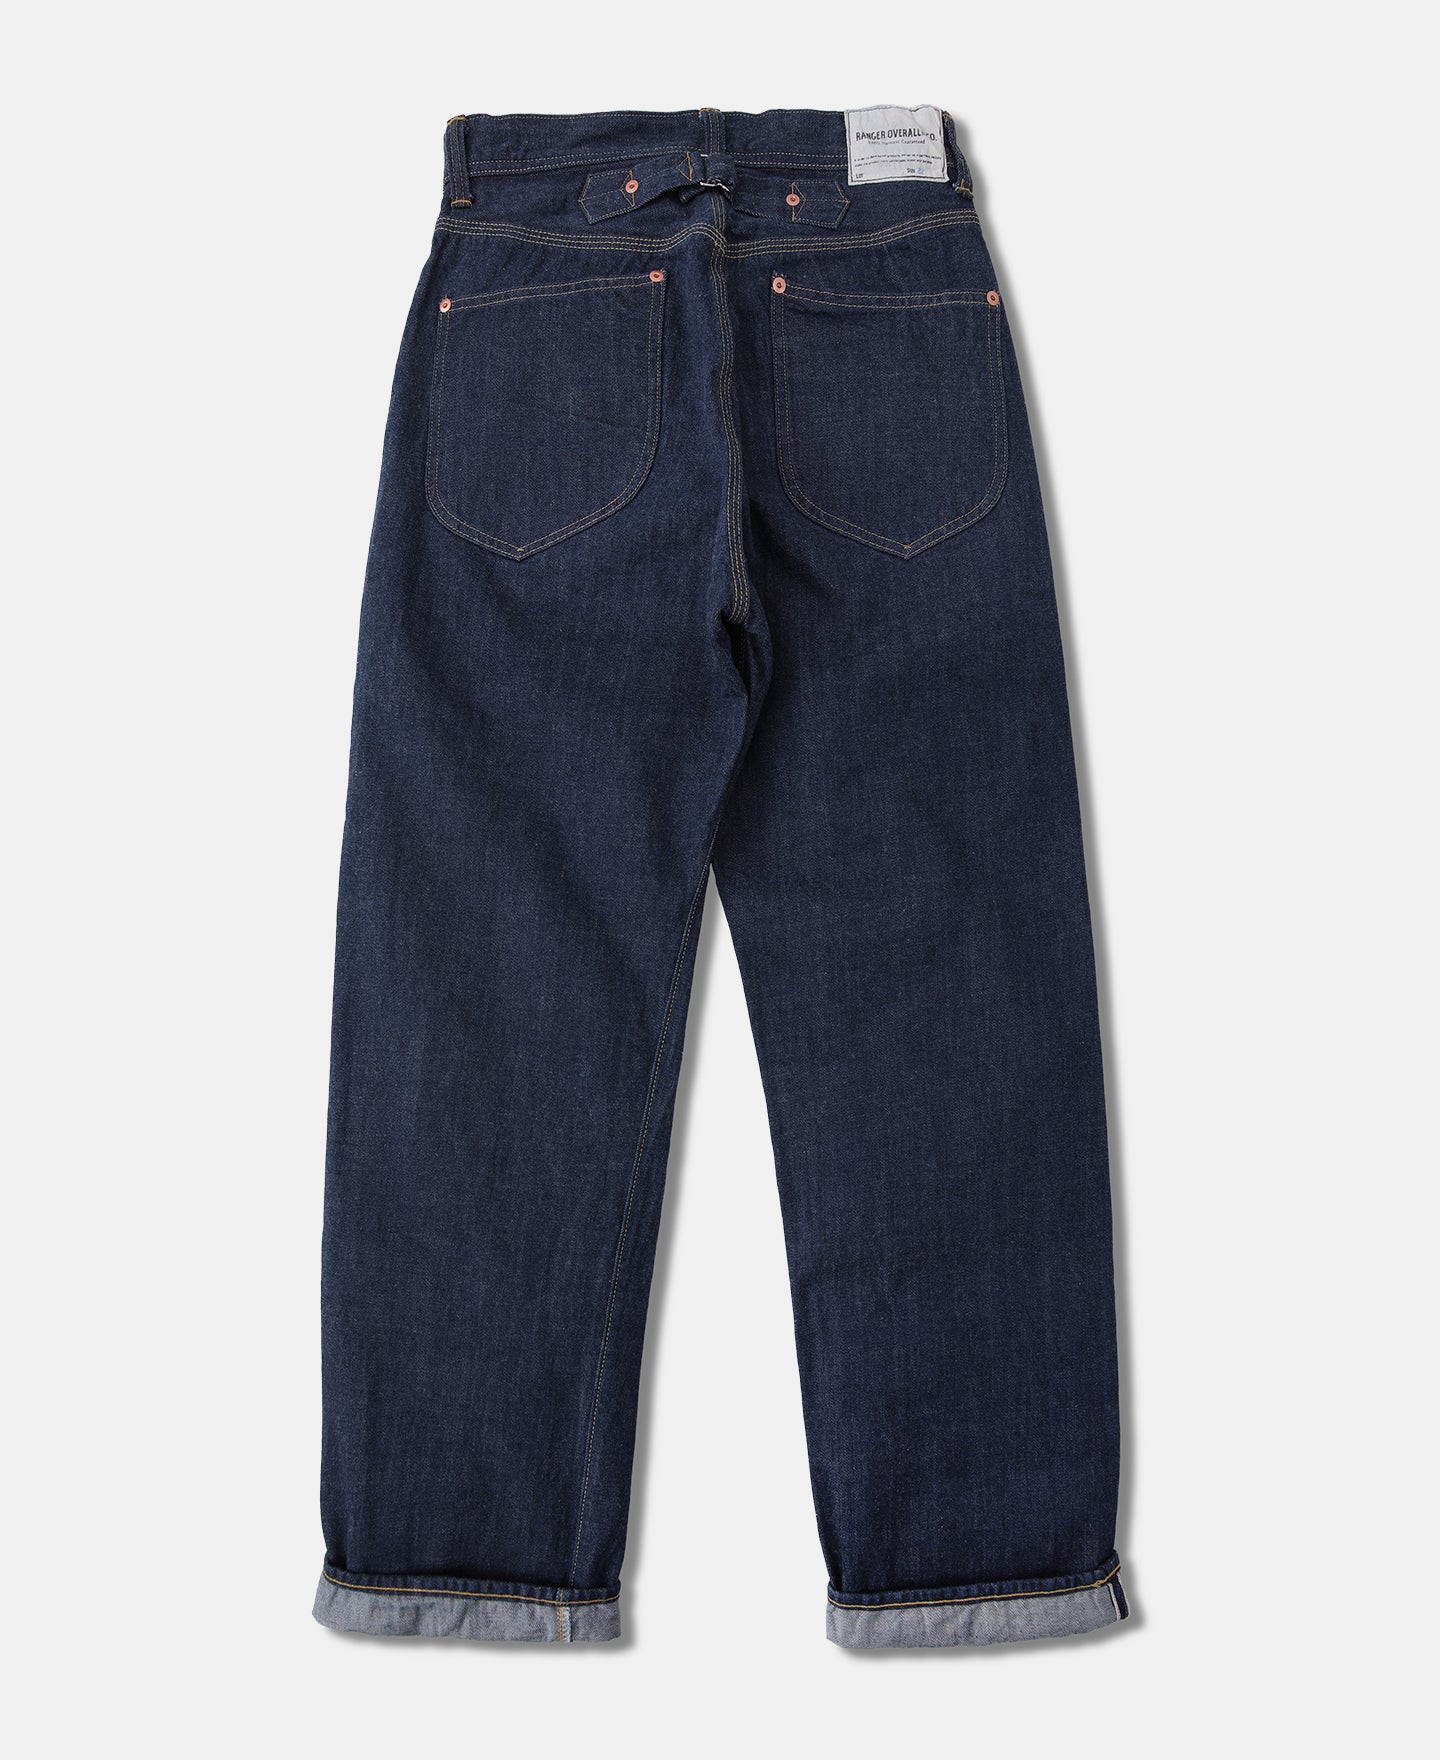 Vintage Levi Strauss & Co. Denim Jeans Jacket Origina… - Gem